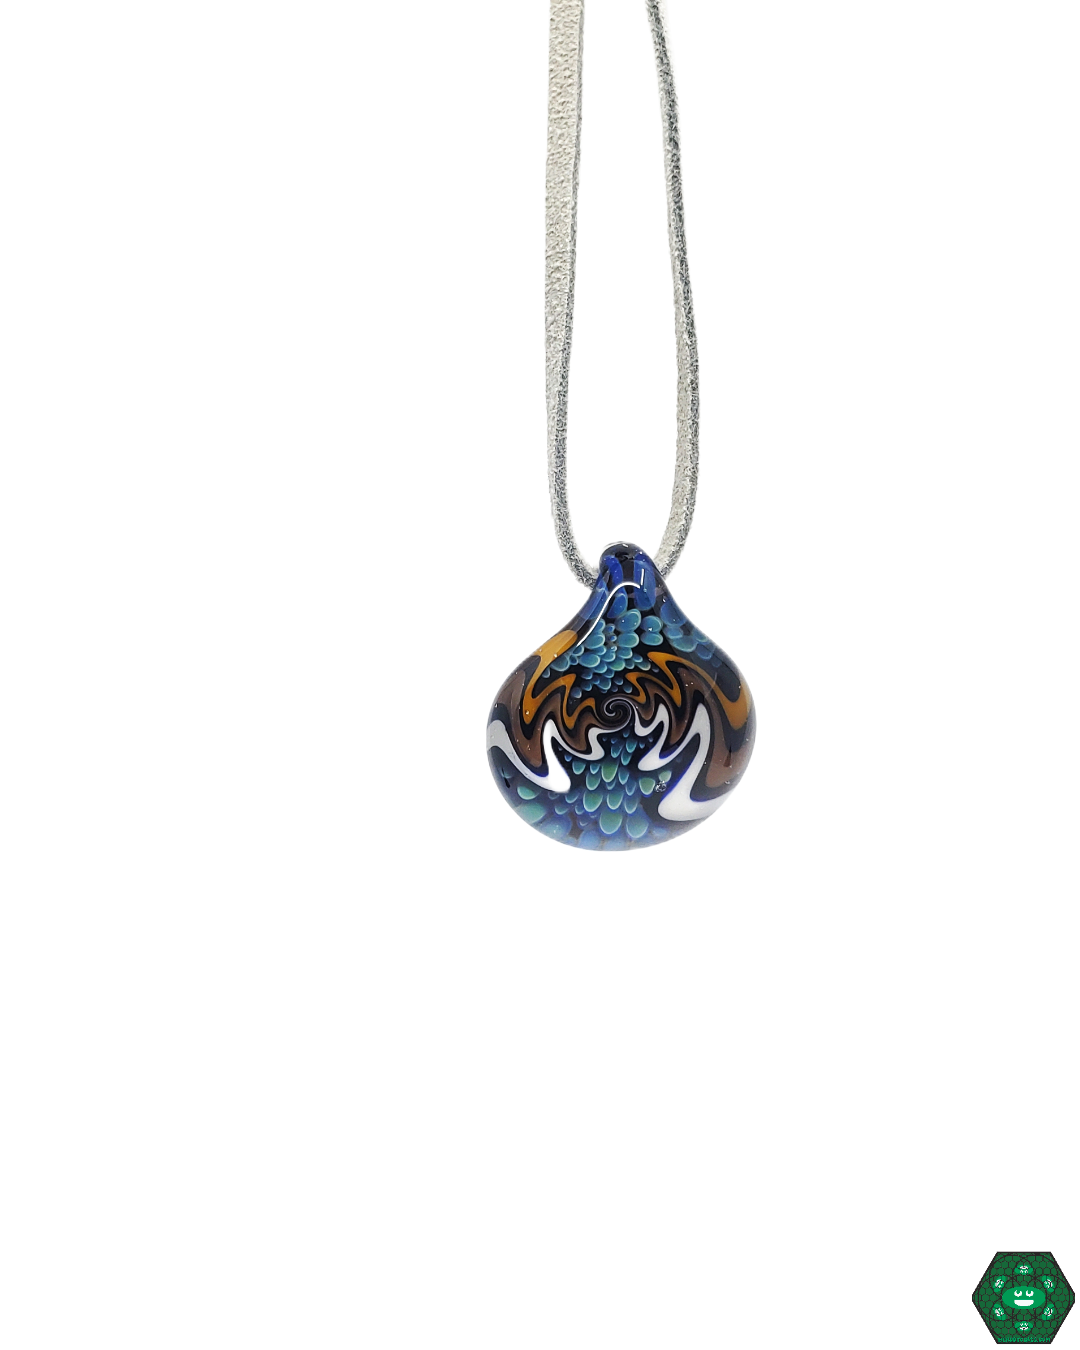 Blown Glass Turtle - Golden Waters Tribal - Pendant - Glass Art - Sea  Turtle - Handmade - Unique Jewelry - Cute -Turtle Necklace -Gift Ideas